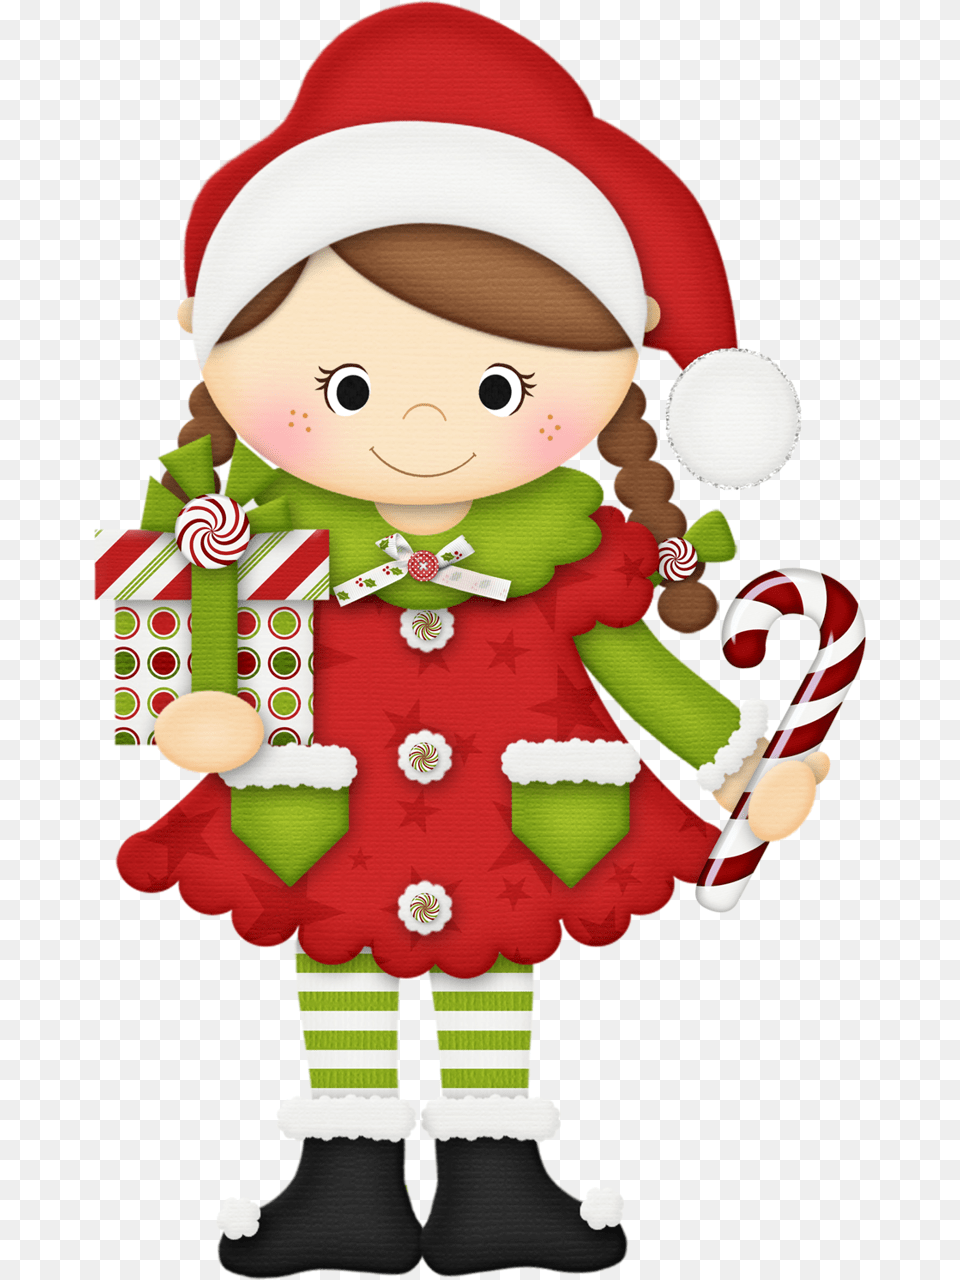 Christmas Elf At Work Image Mamae Noel Desenho, Food, Sweets, Doll, Toy Free Transparent Png